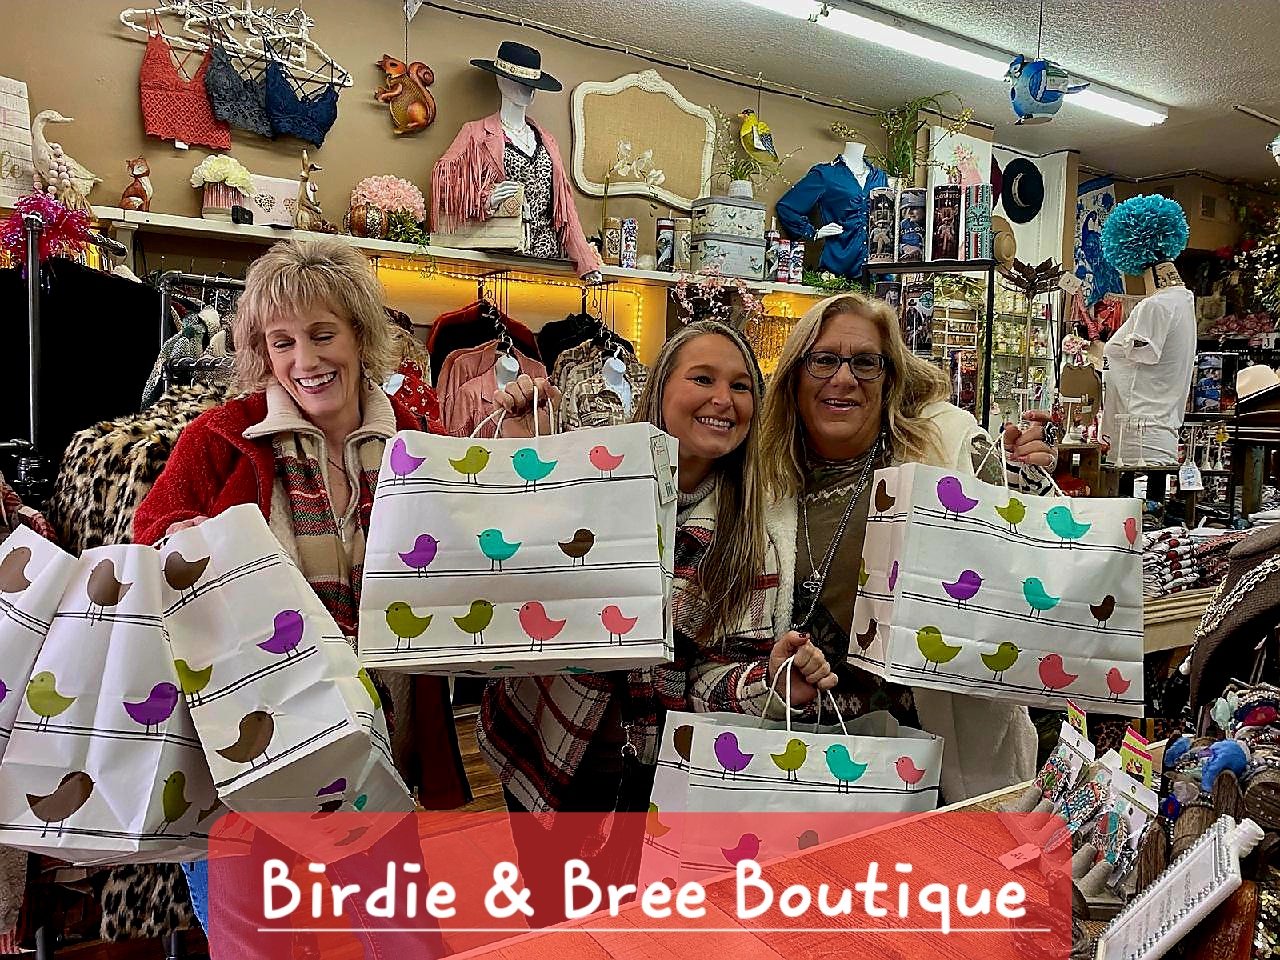 Birdie & Bree Boutique